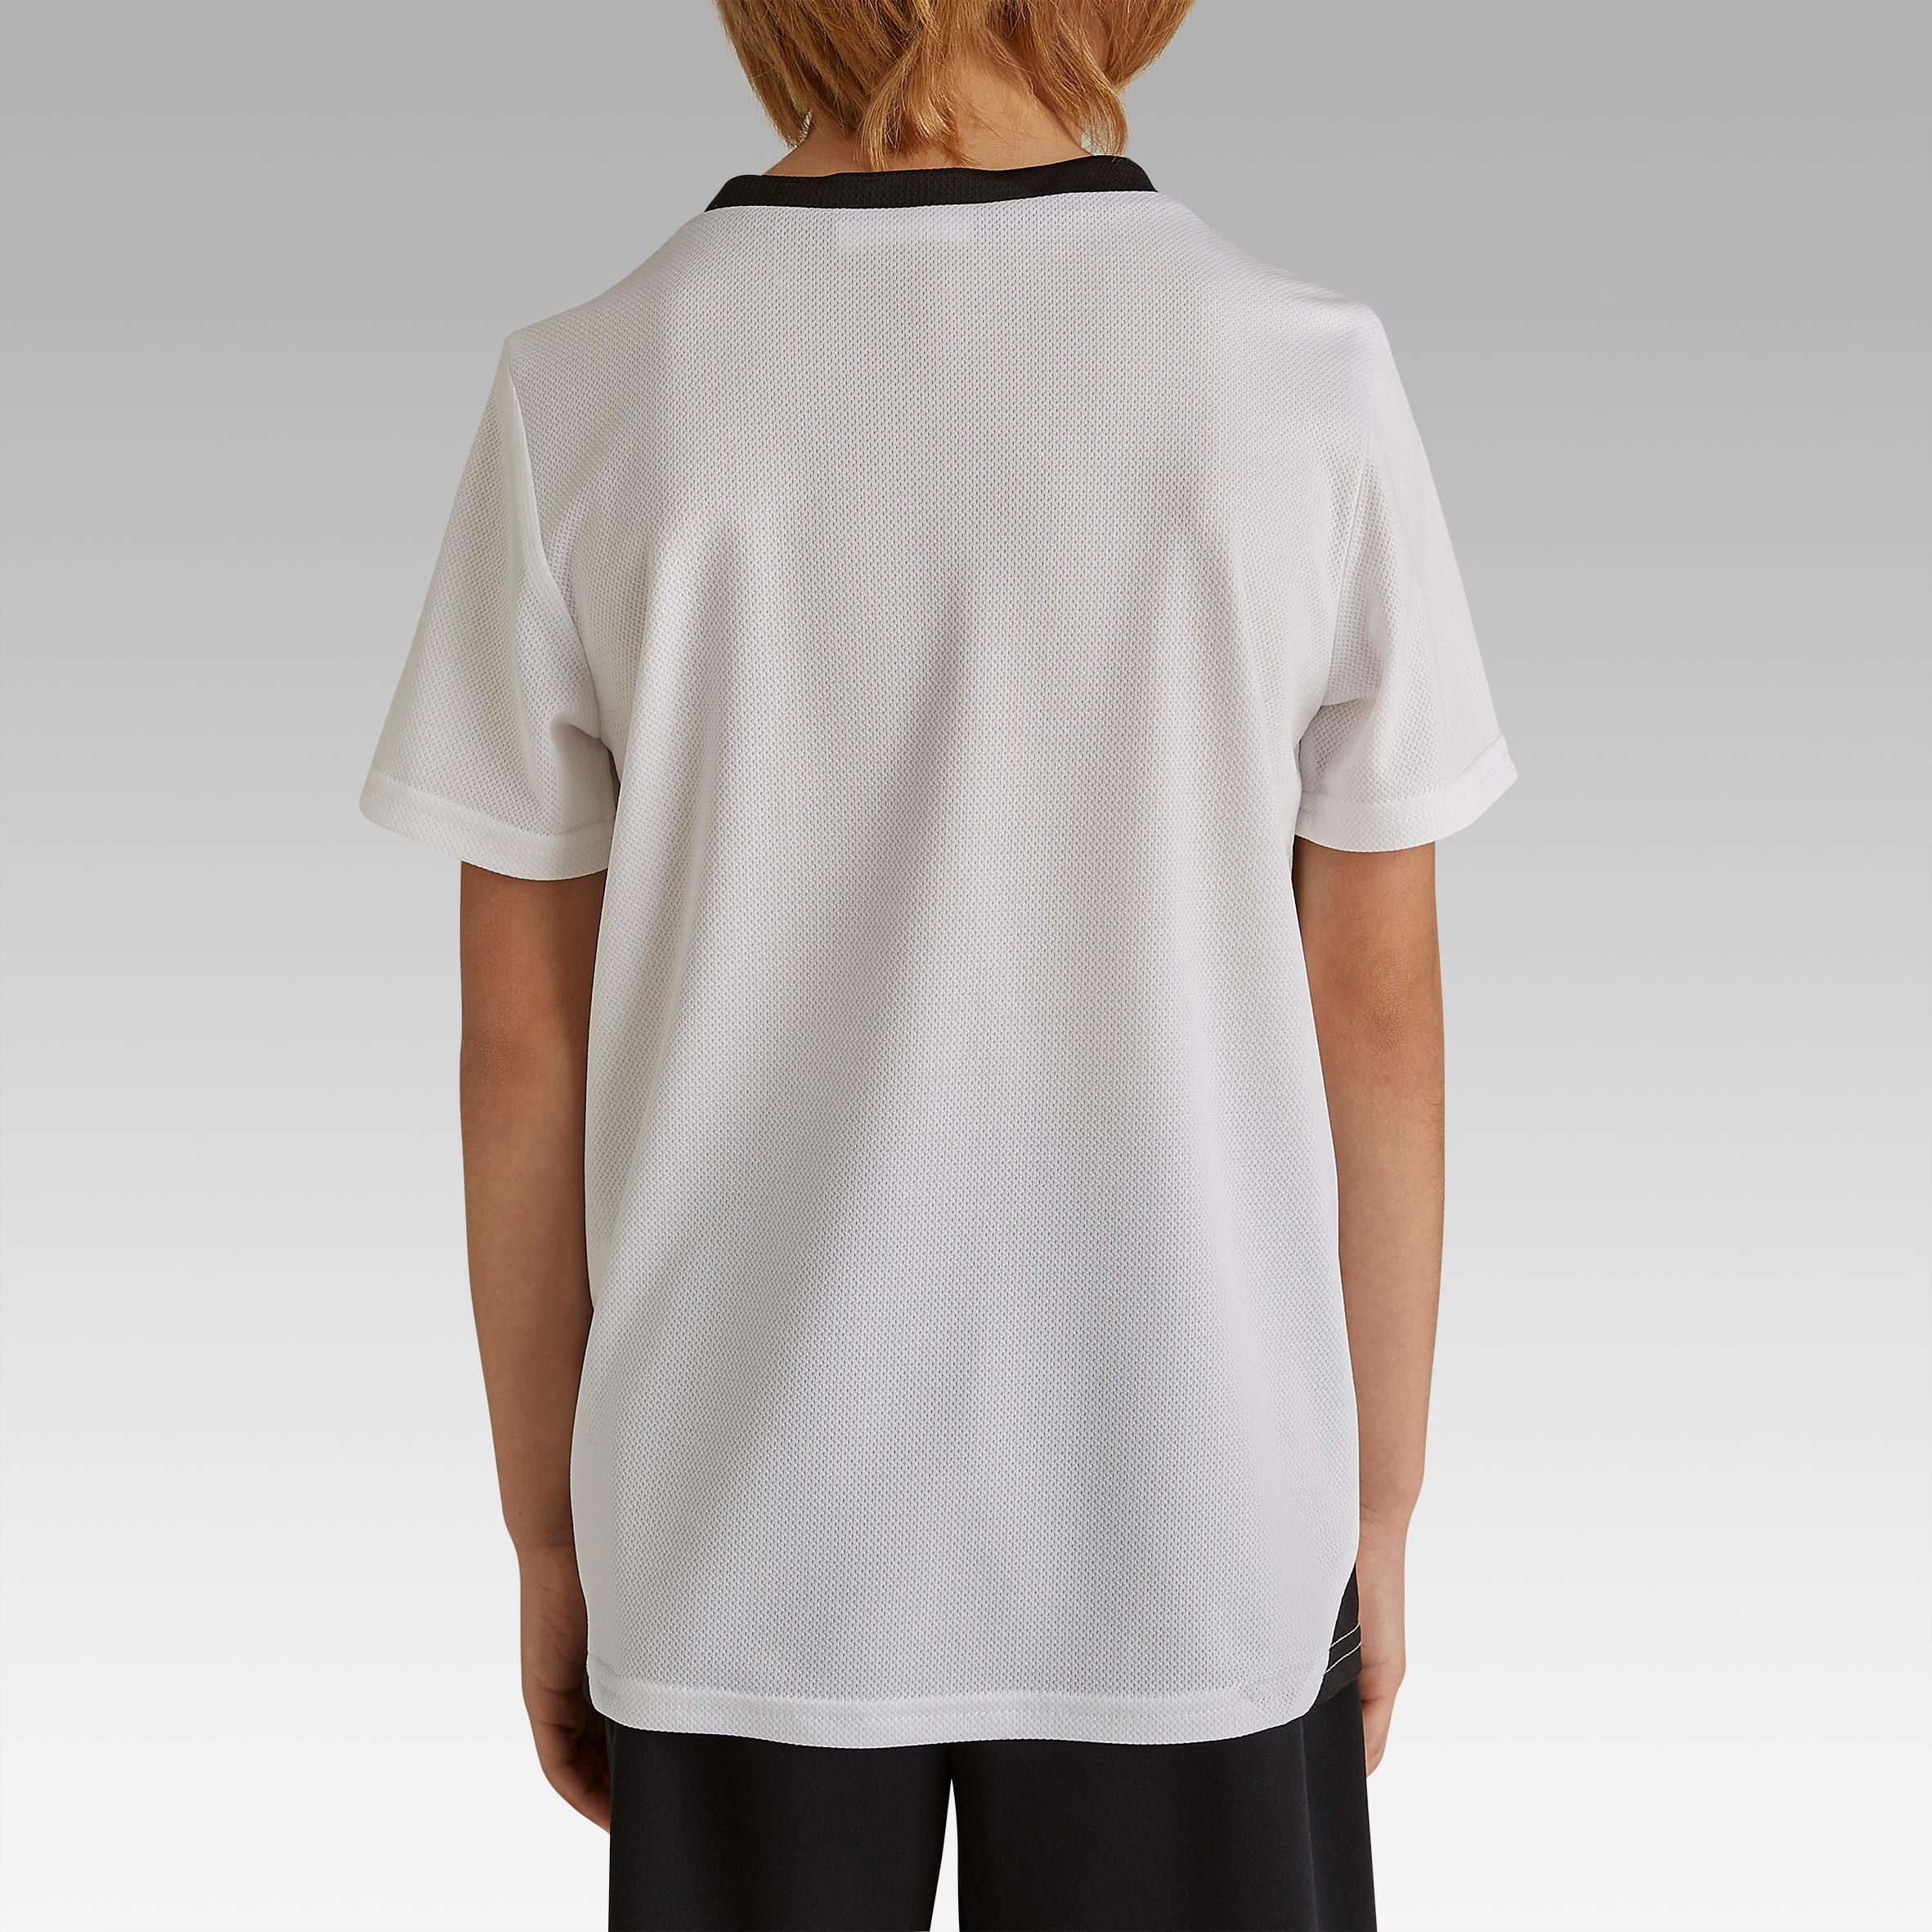 Refurbished Kids Football Shirt Essential - White - A Grade 4/7